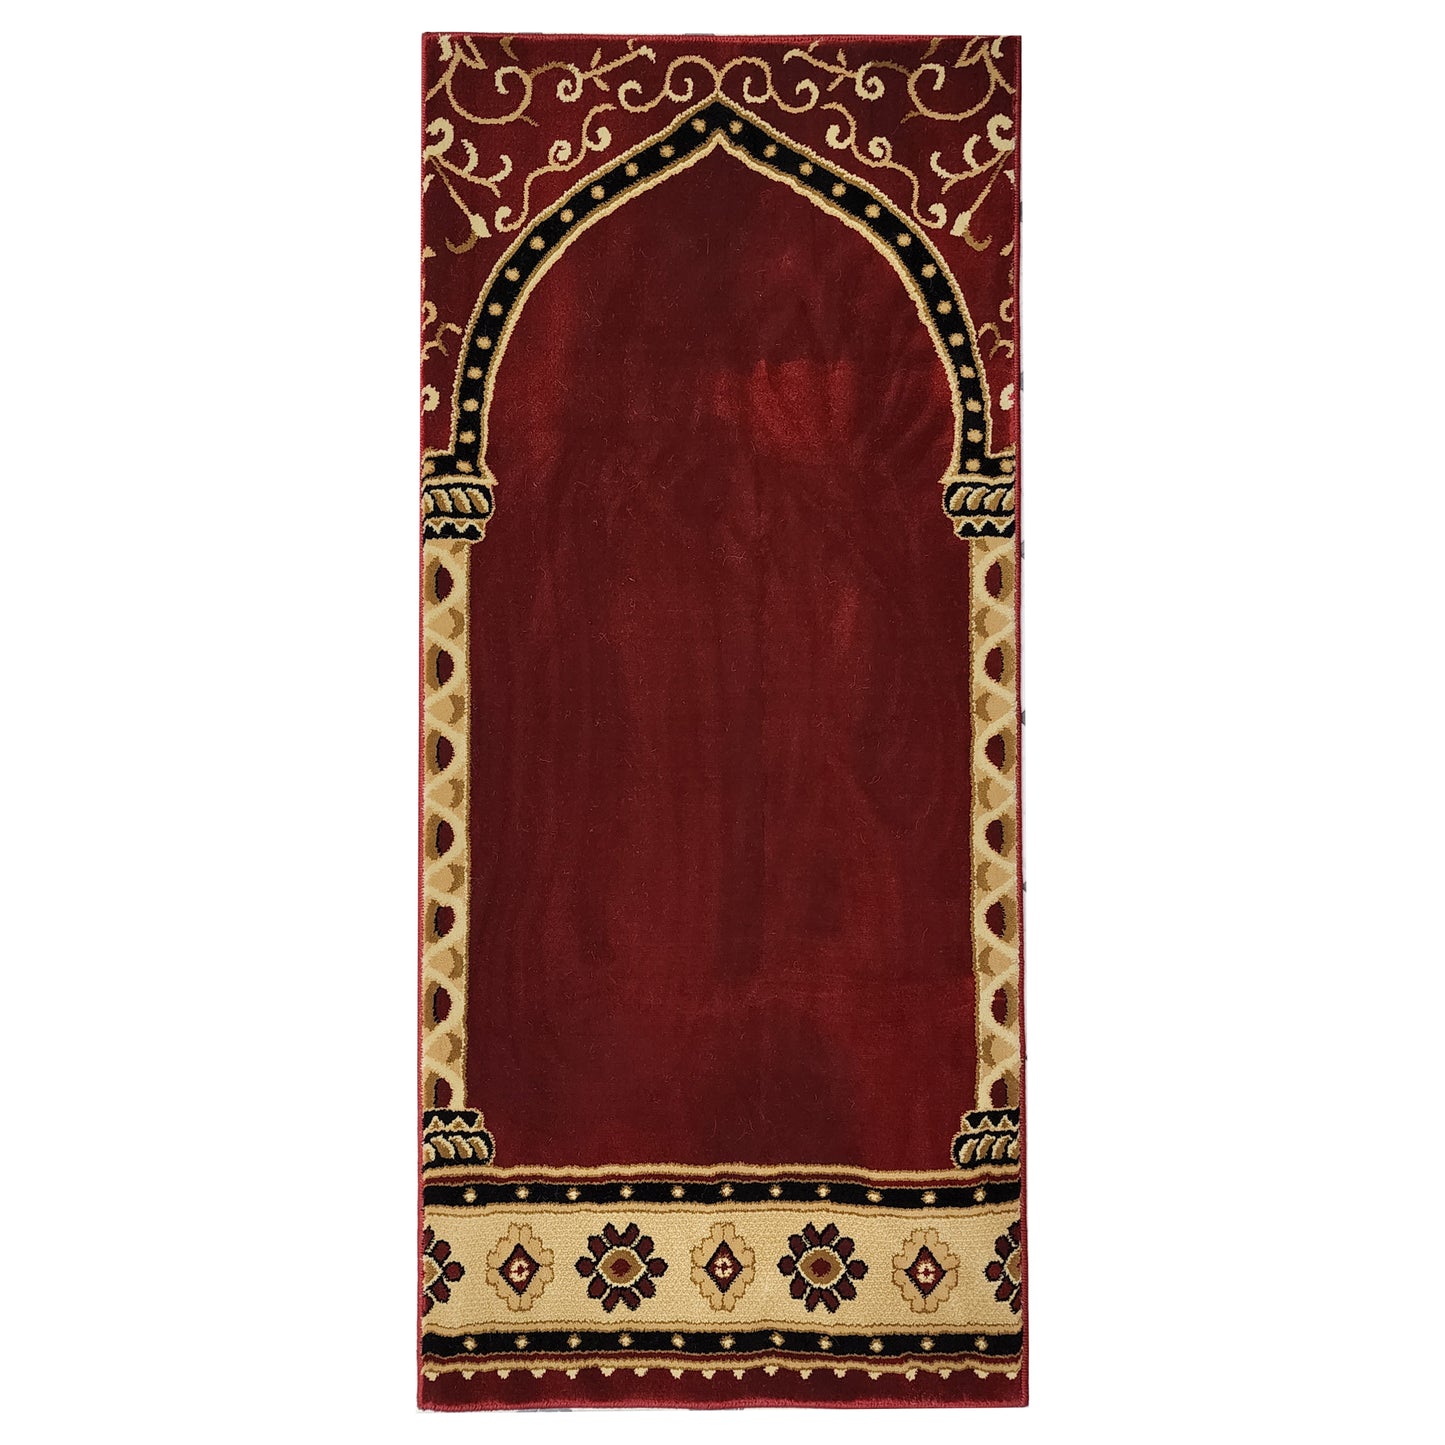 HEJAZ Red Single Prayer Carpet Mat